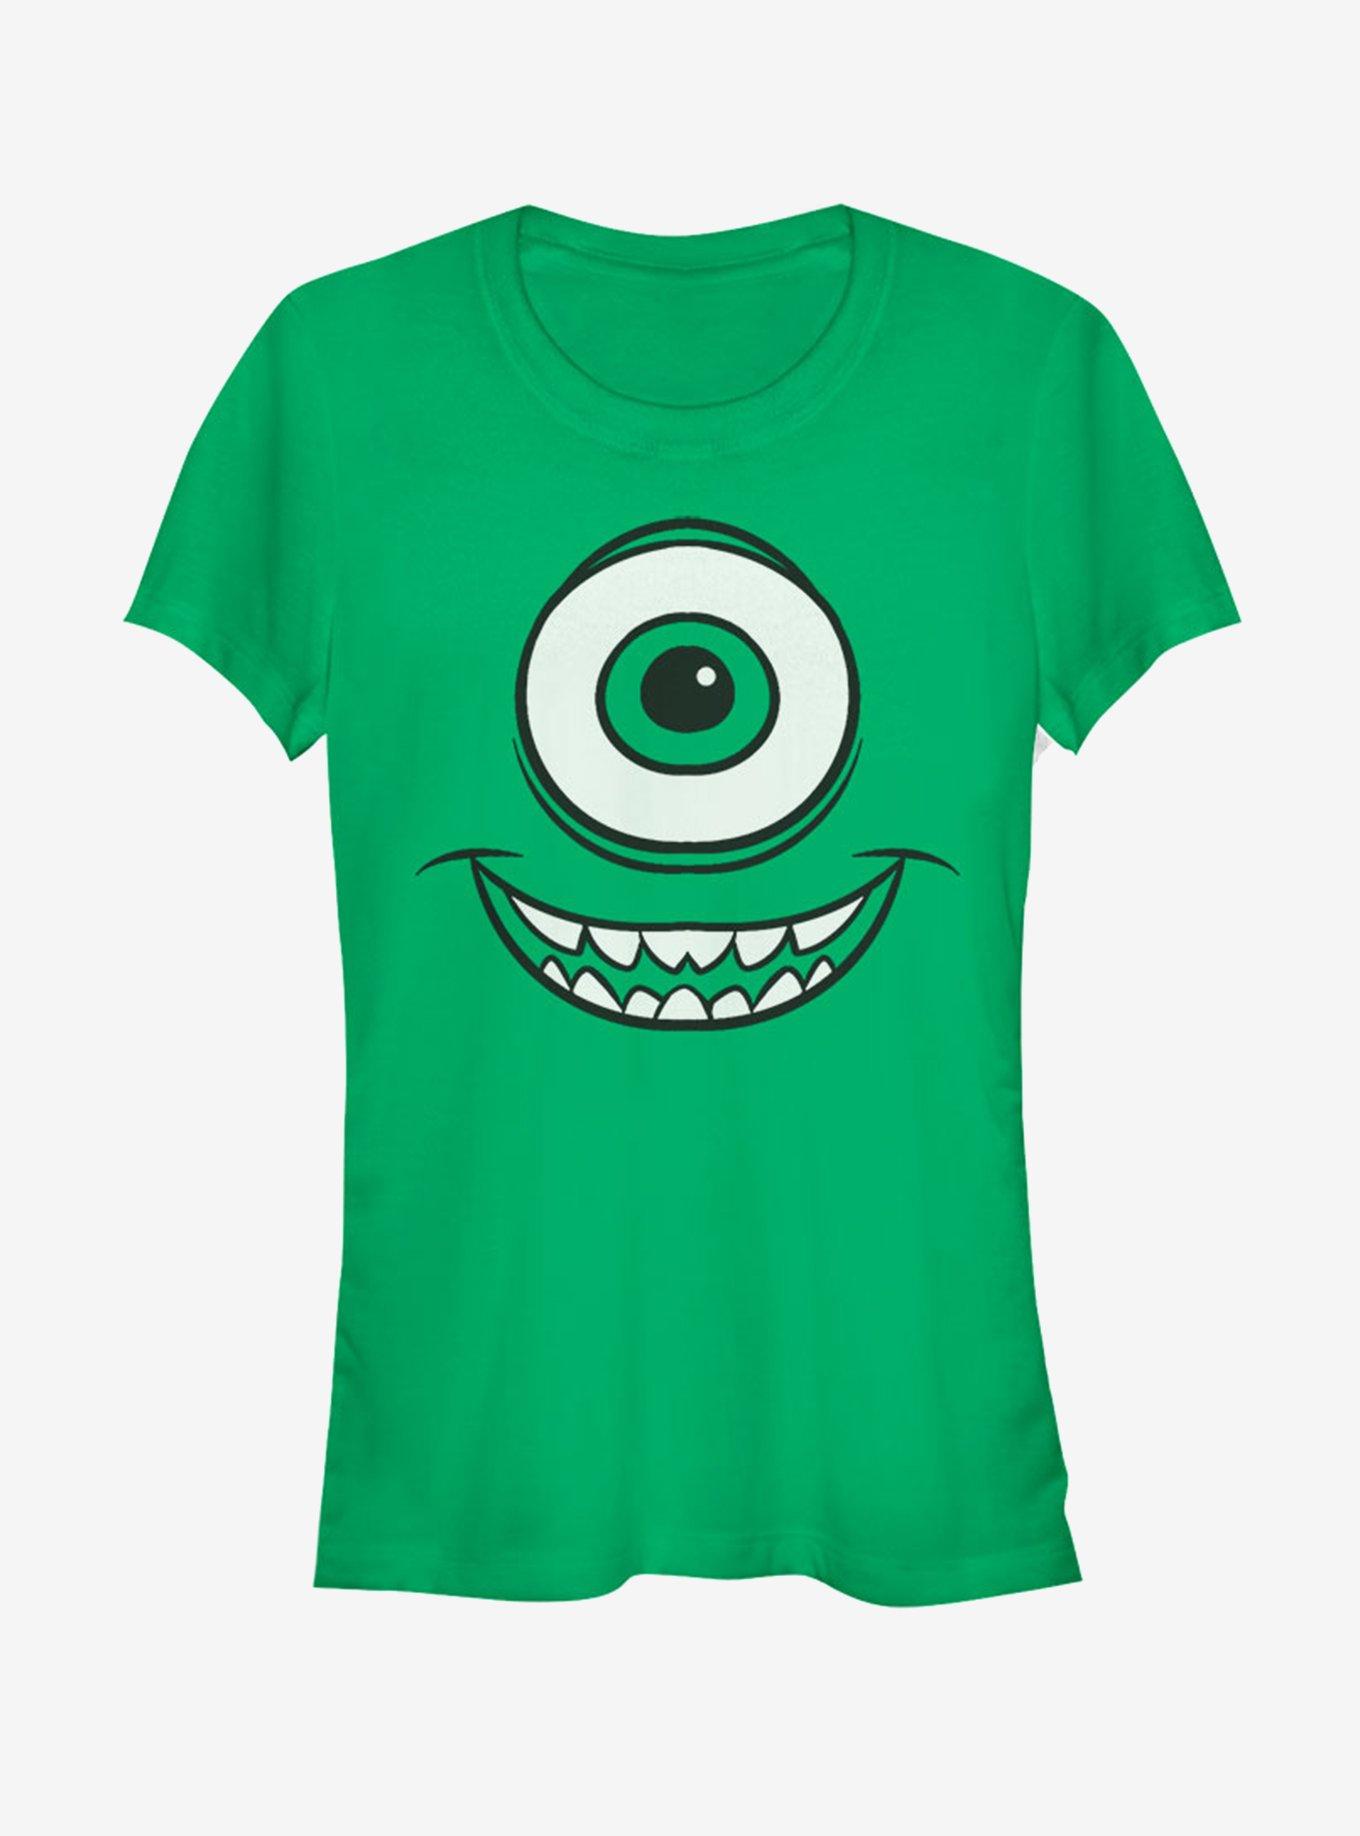 Disney Pixar Monsters, Inc. Mike Face Girls T-Shirt